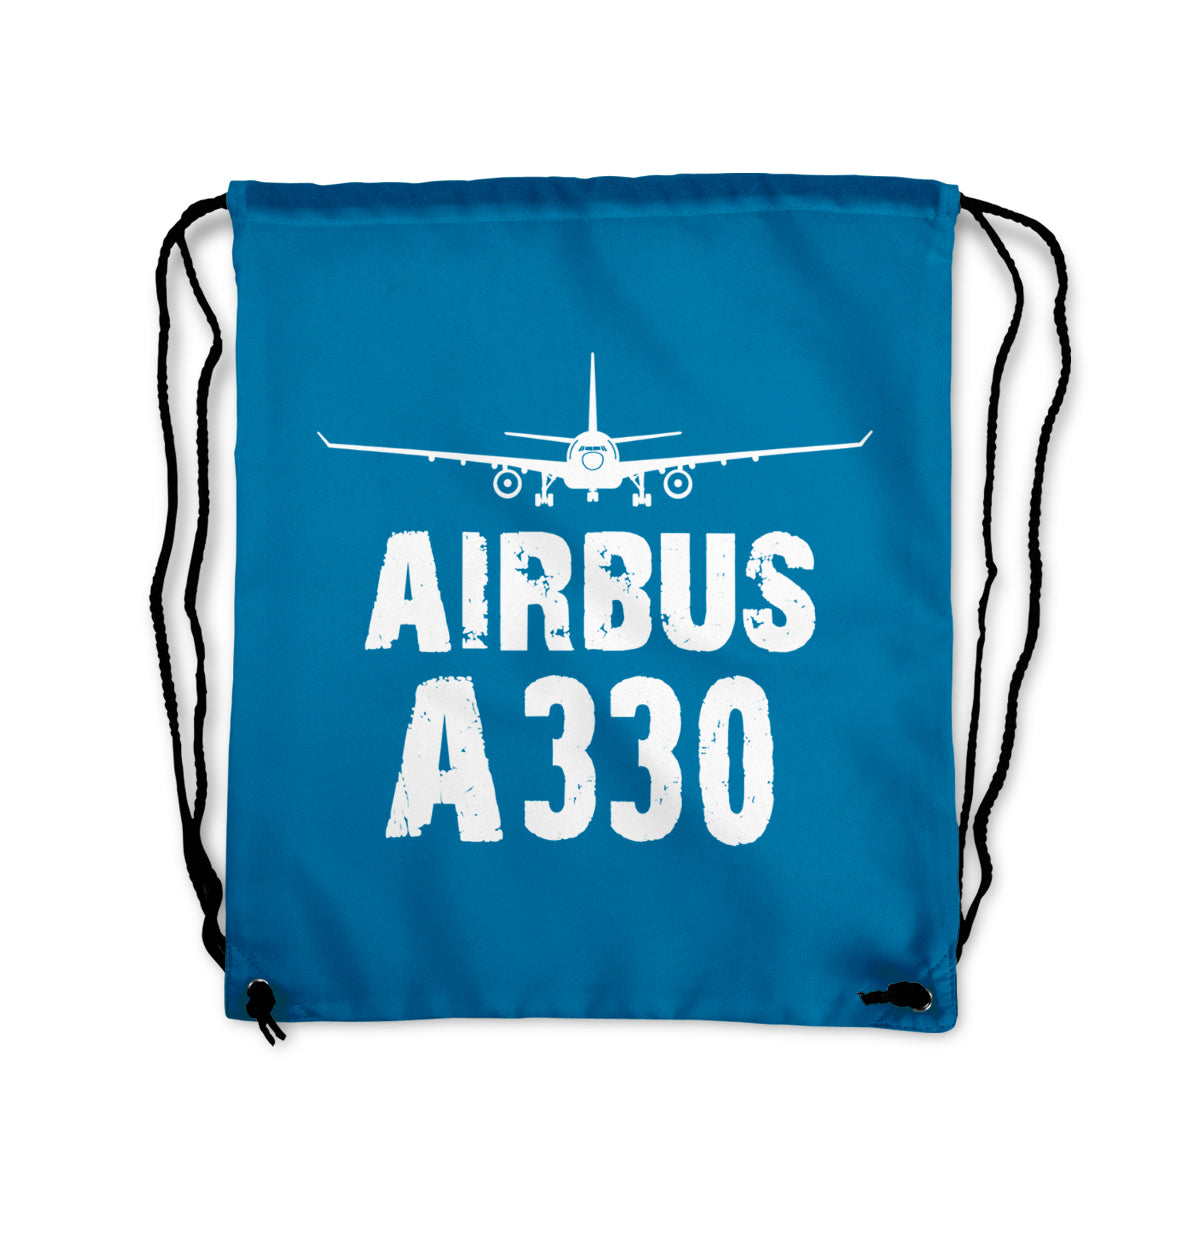 Airbus A330 & Plane Designed Drawstring Bags